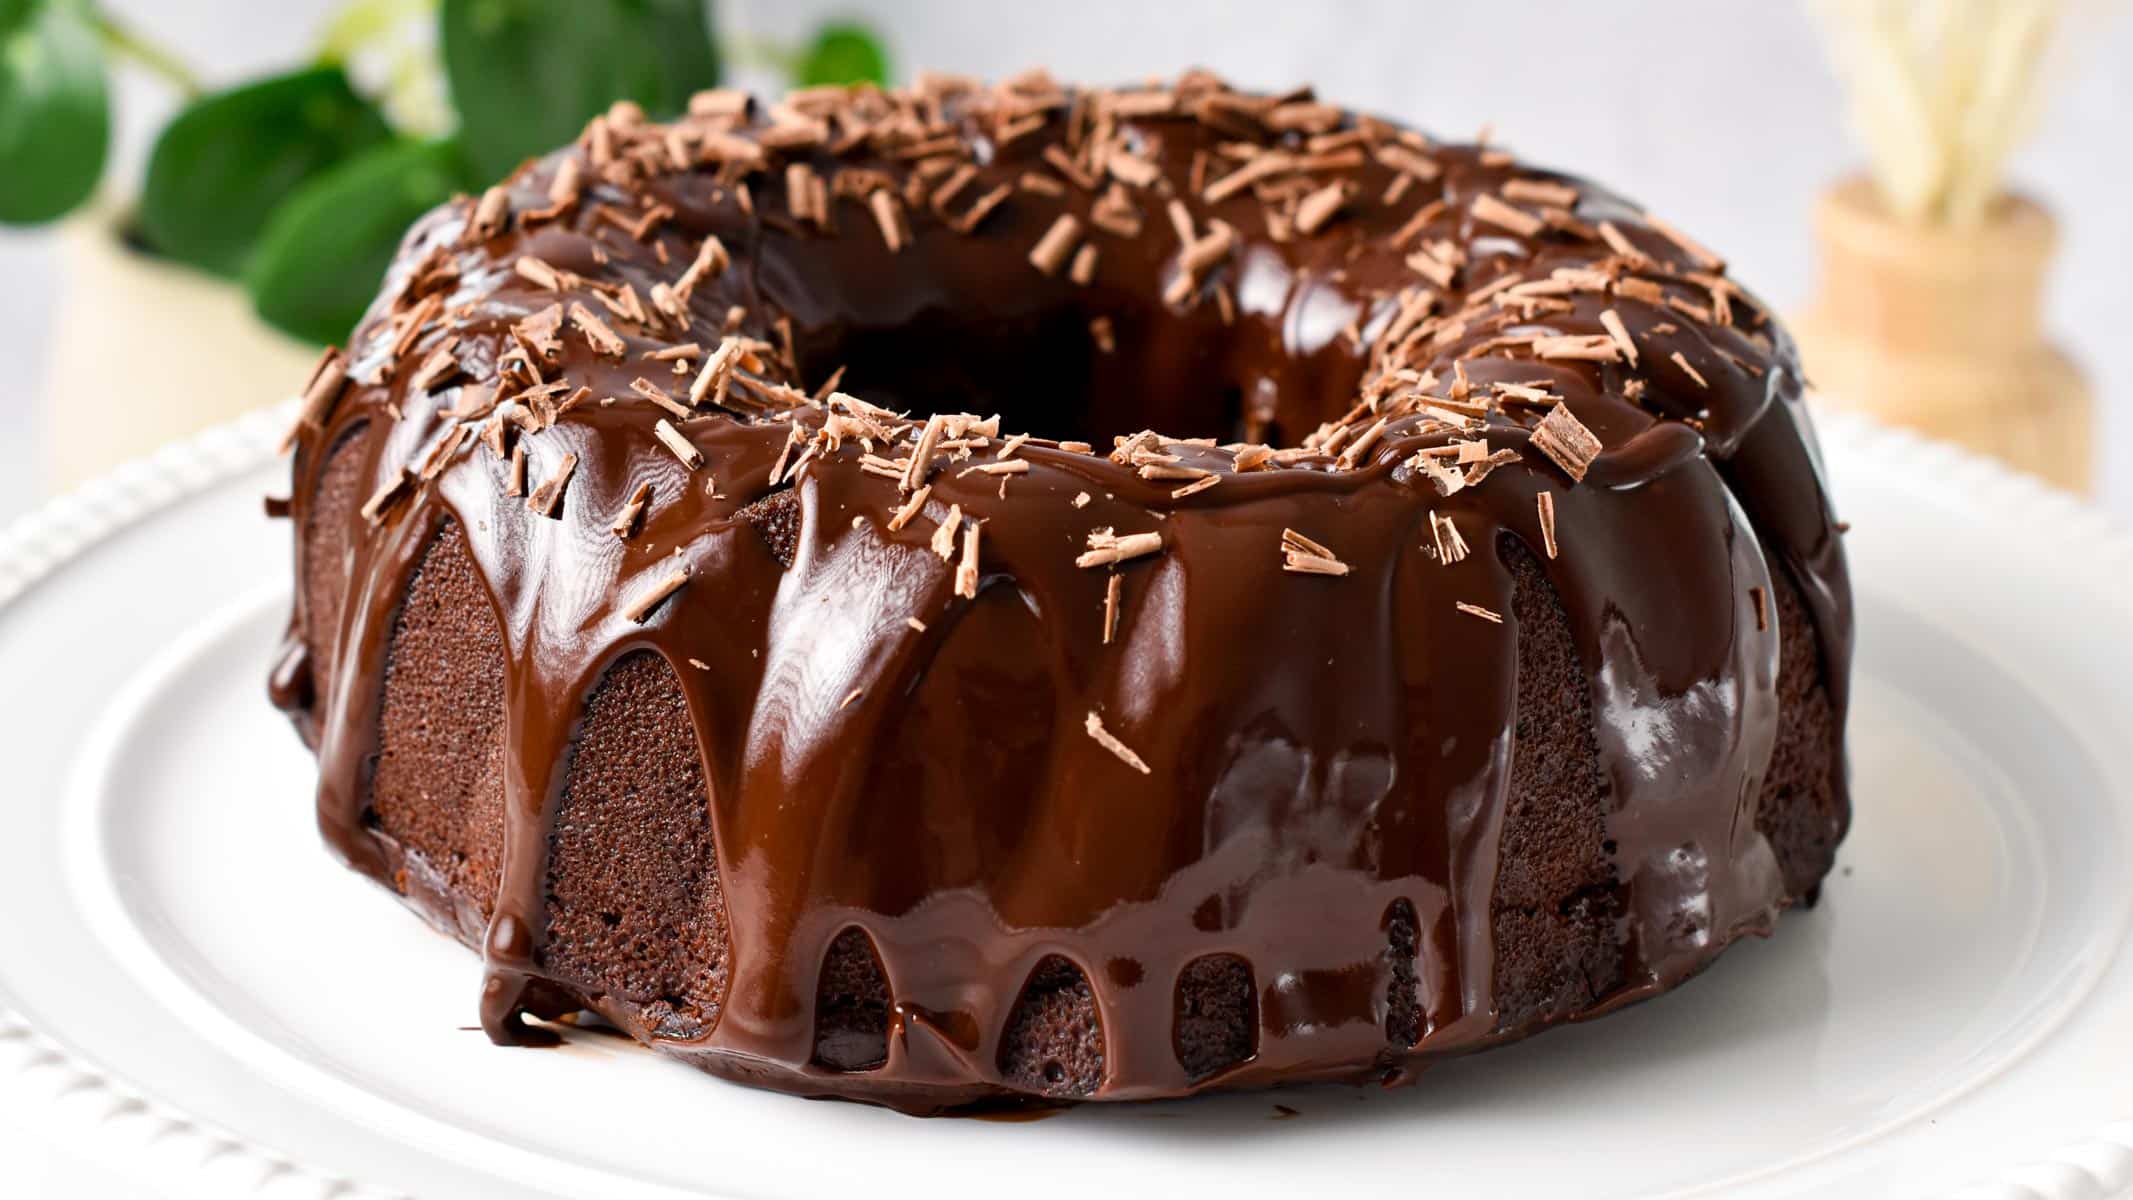 a chocolate Bundt Cake on a cake stand with drippy chocolate ganache